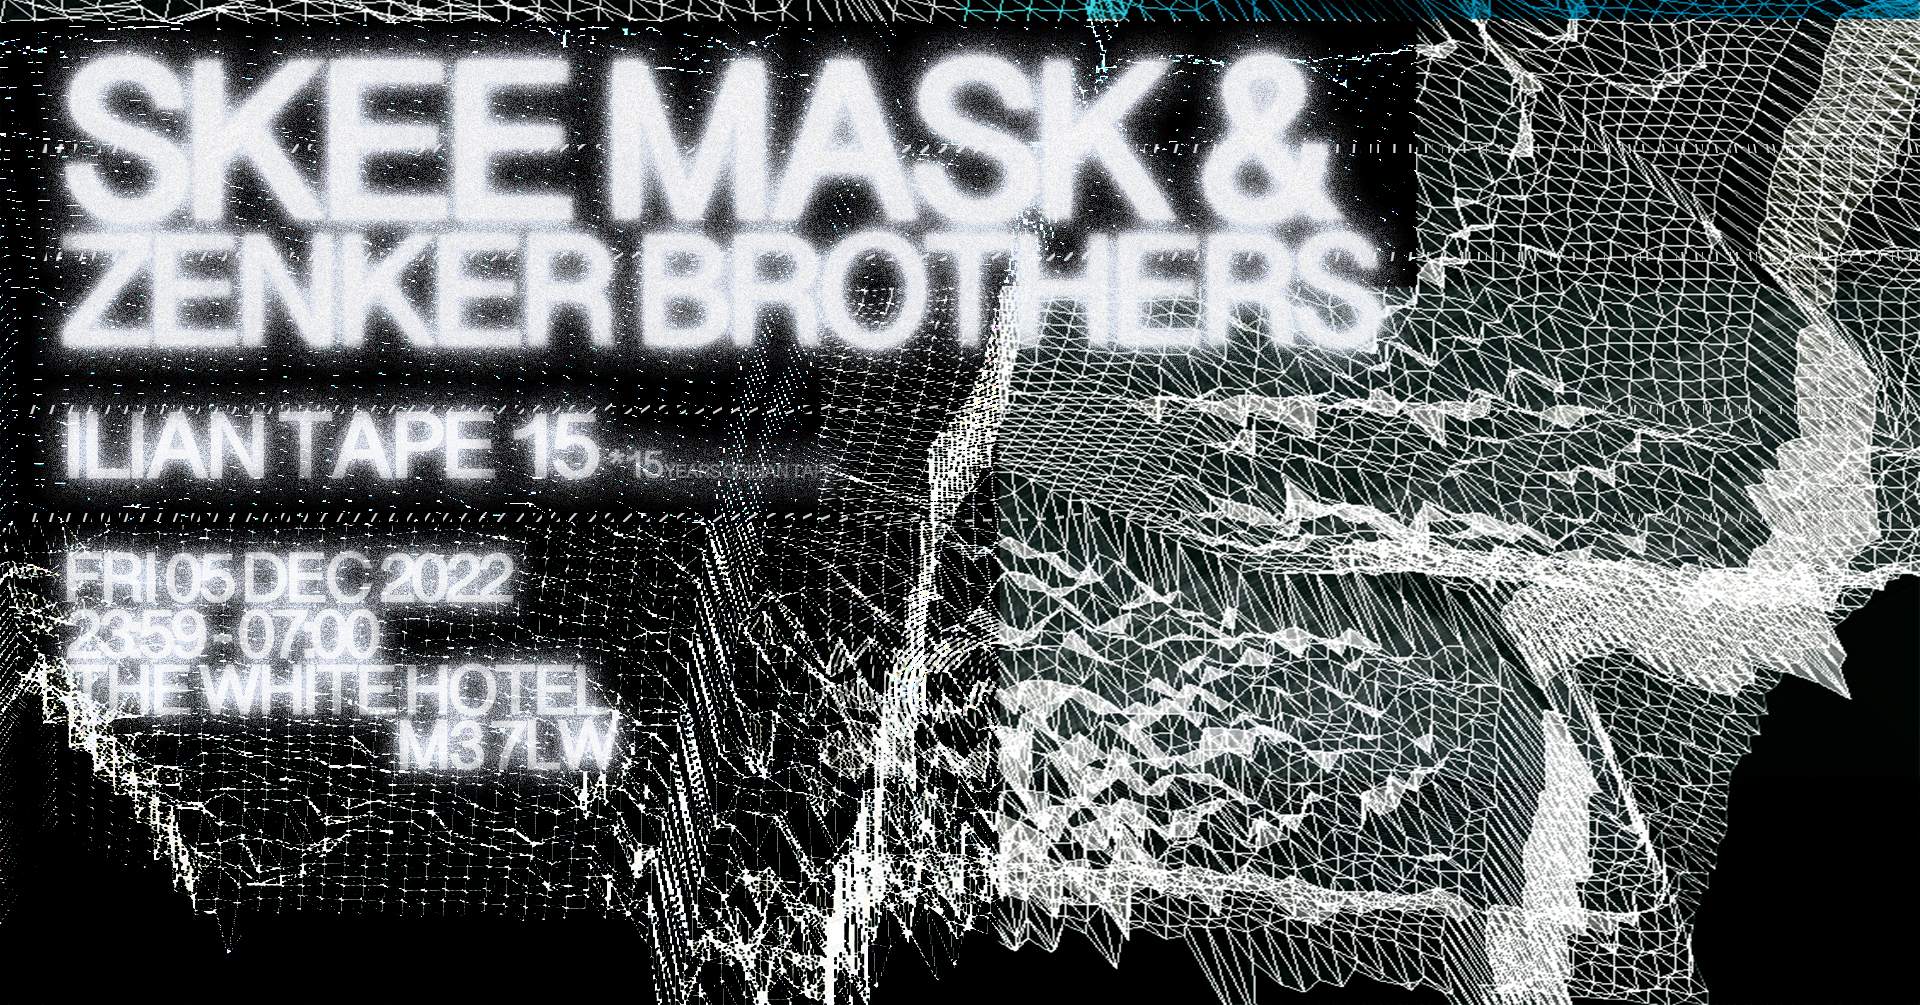 Skee Mask & Zenker Brothers - Página trasera